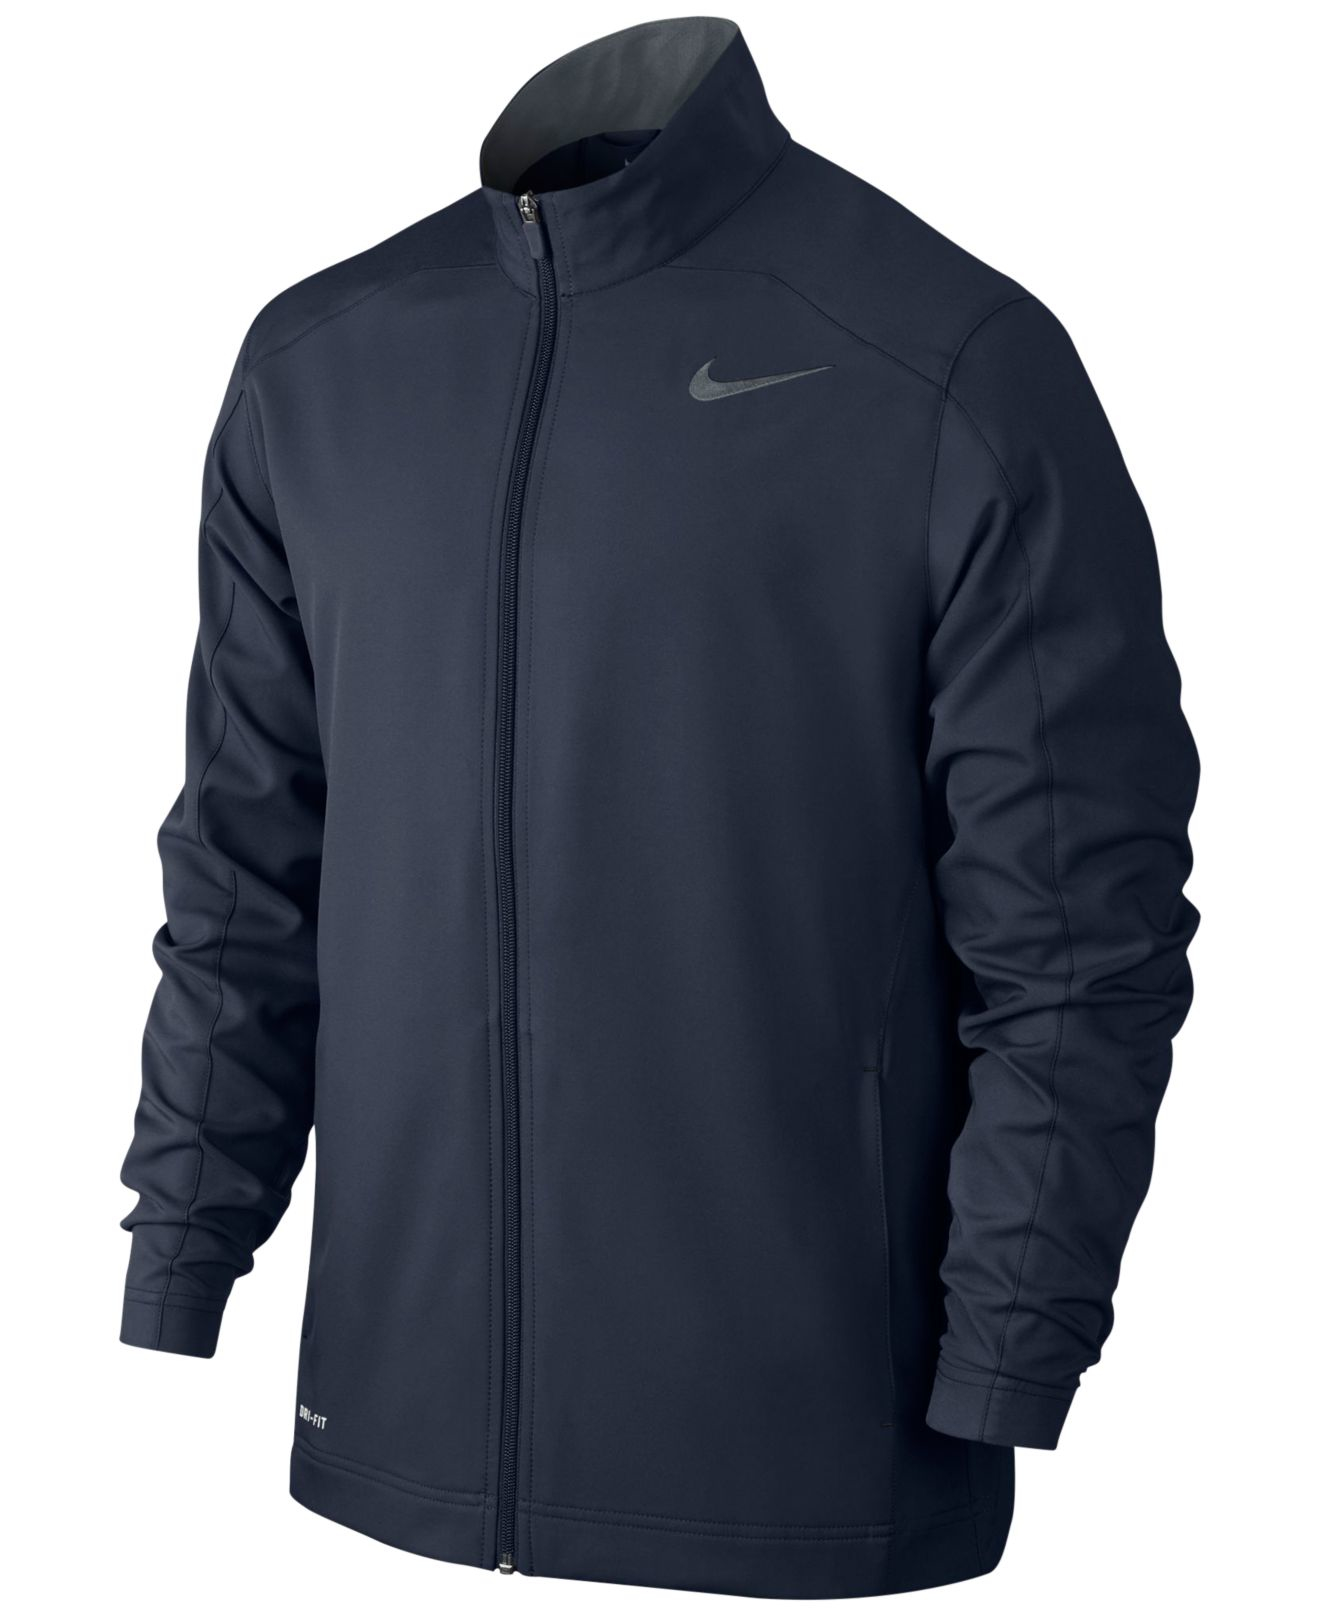 Lyst - Nike Men's Team Dri-fit Full-zip Woven Jacket in Blue for Men